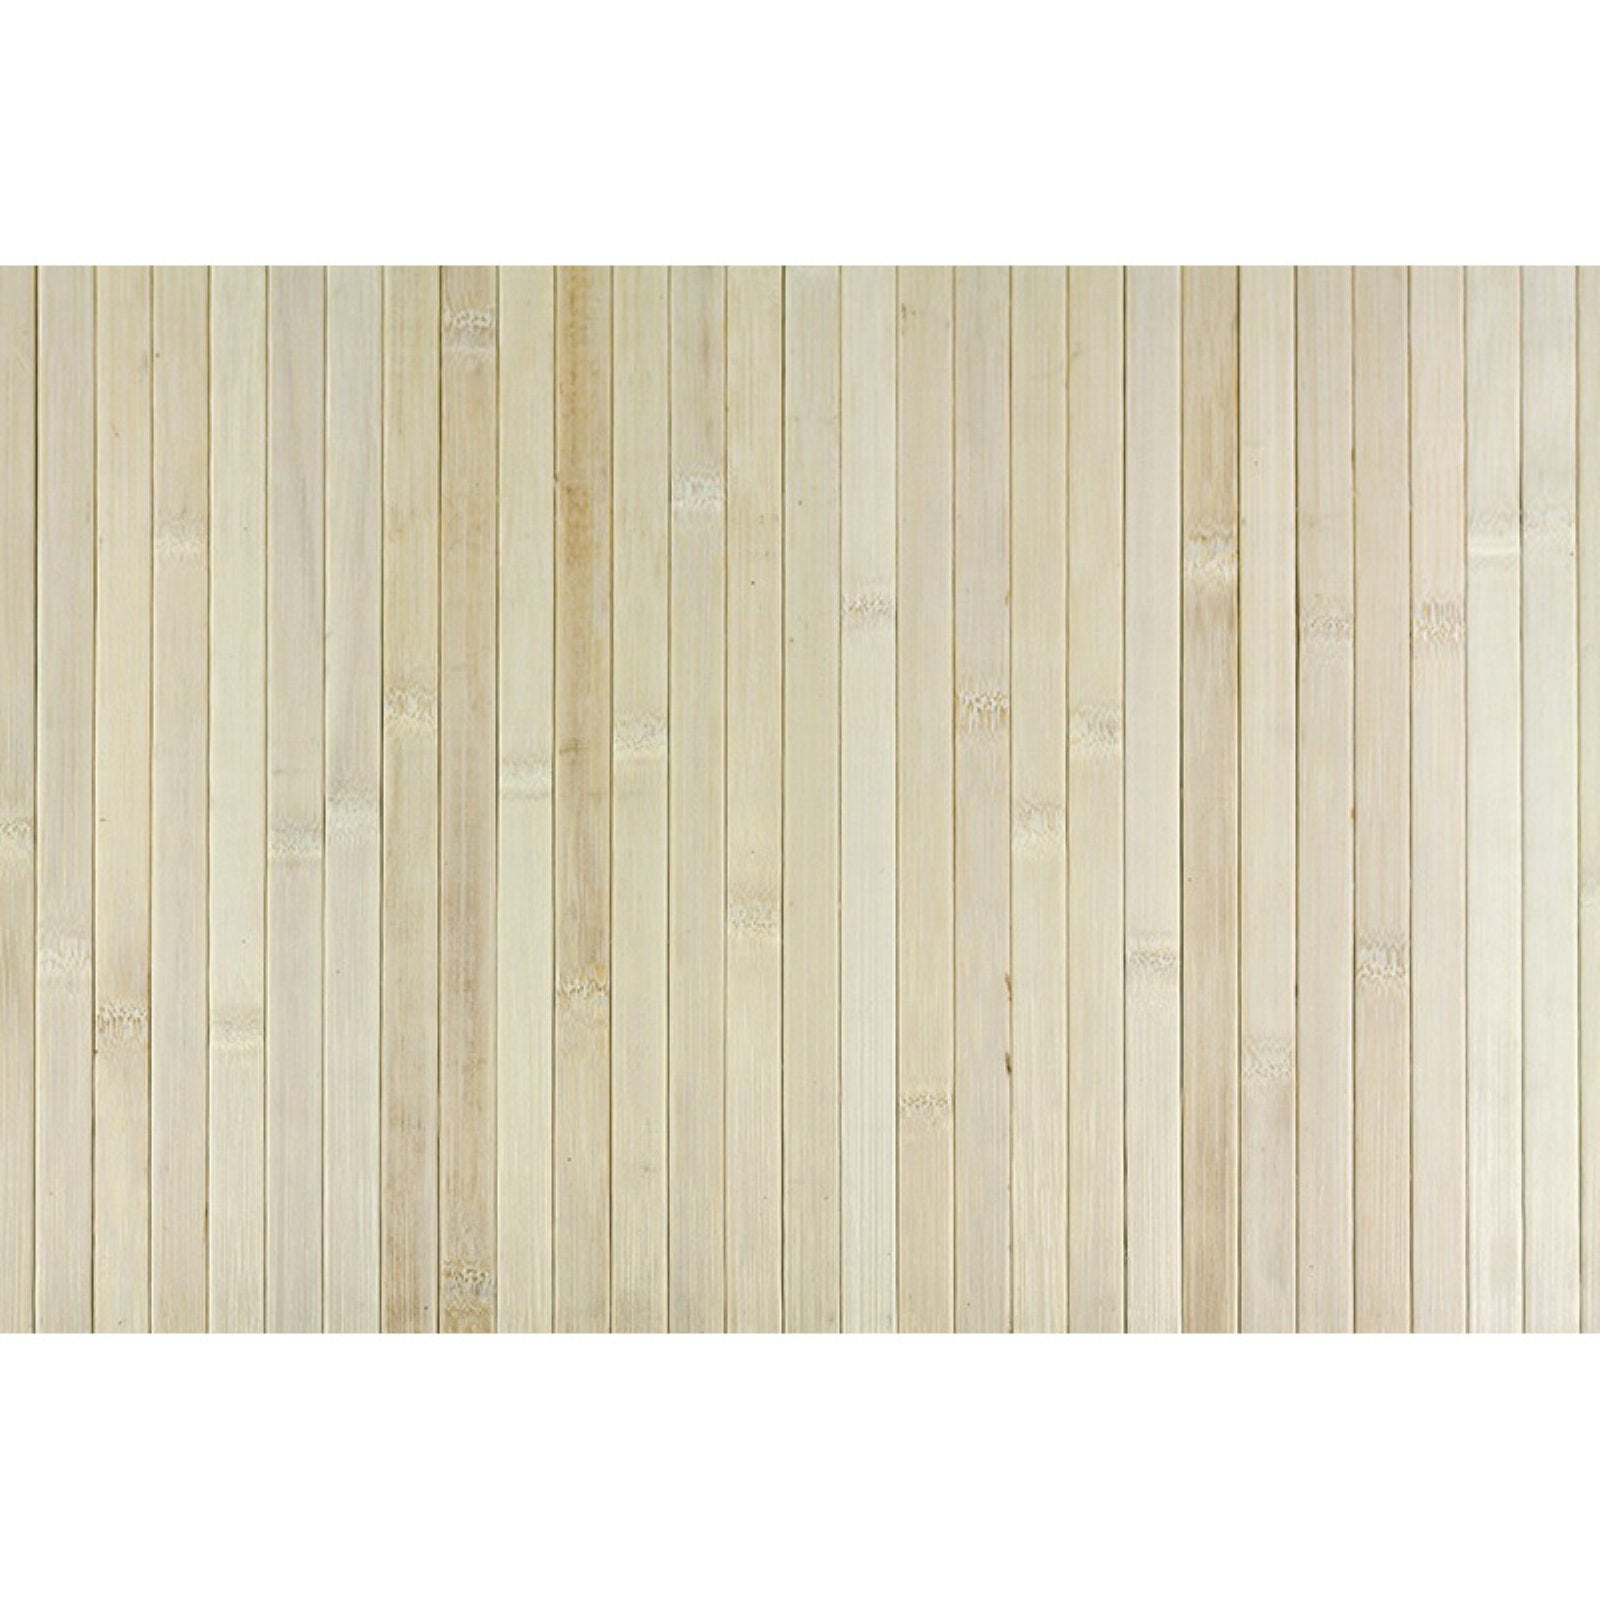 Forever Bamboo Bamboo Wall Paneling Carbonized Finish 4' x 8' 